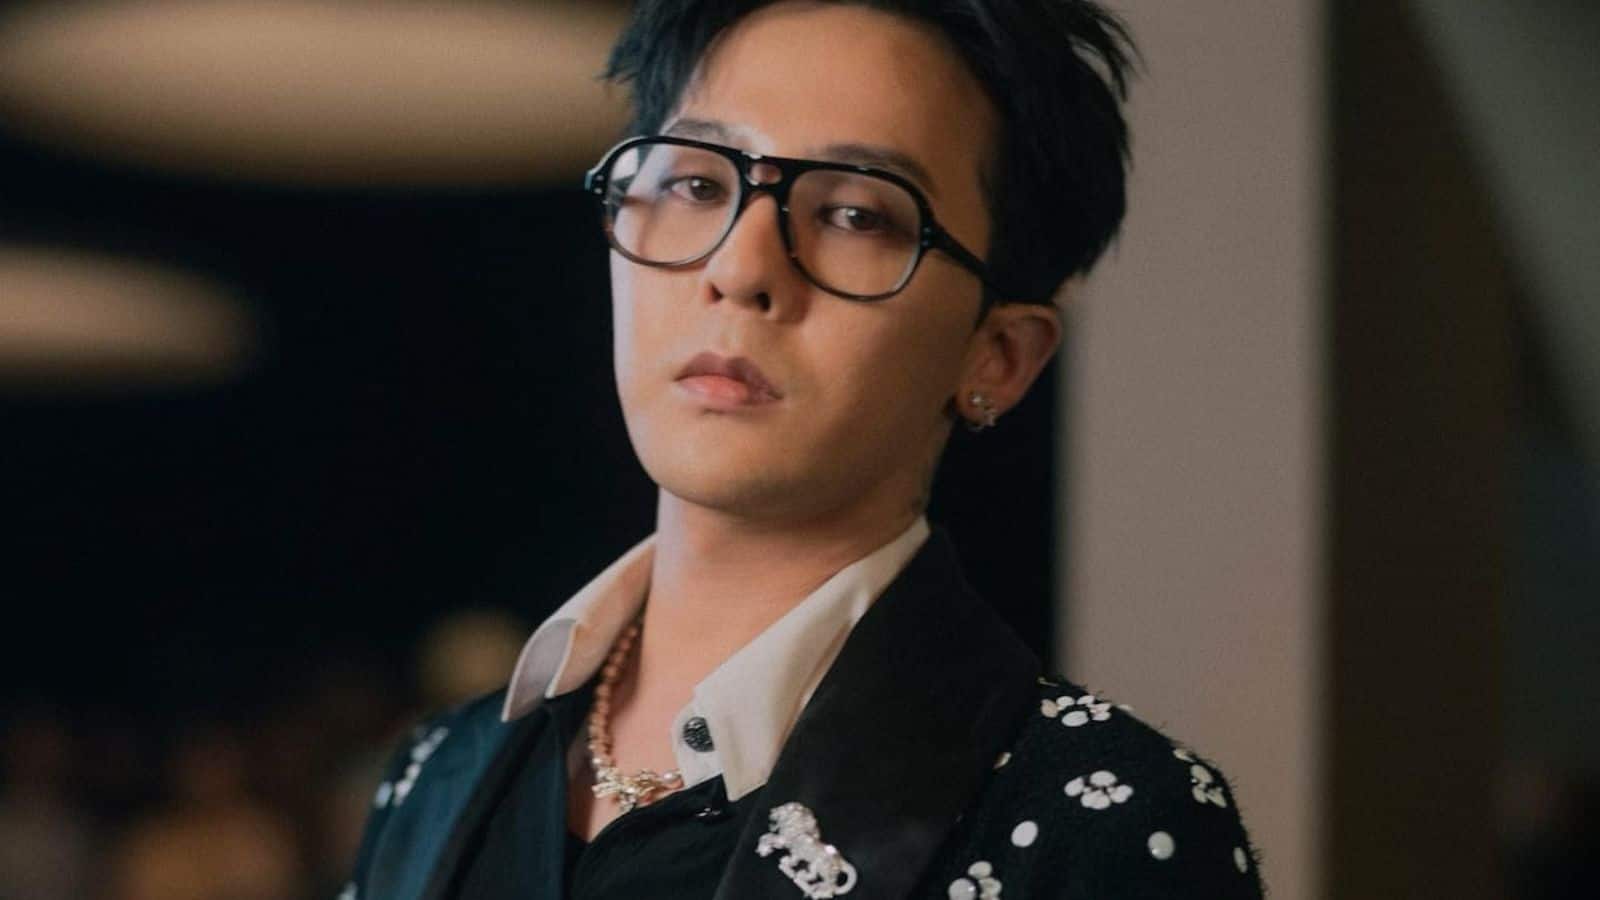 G-Dragon joins KAIST as a visiting professor